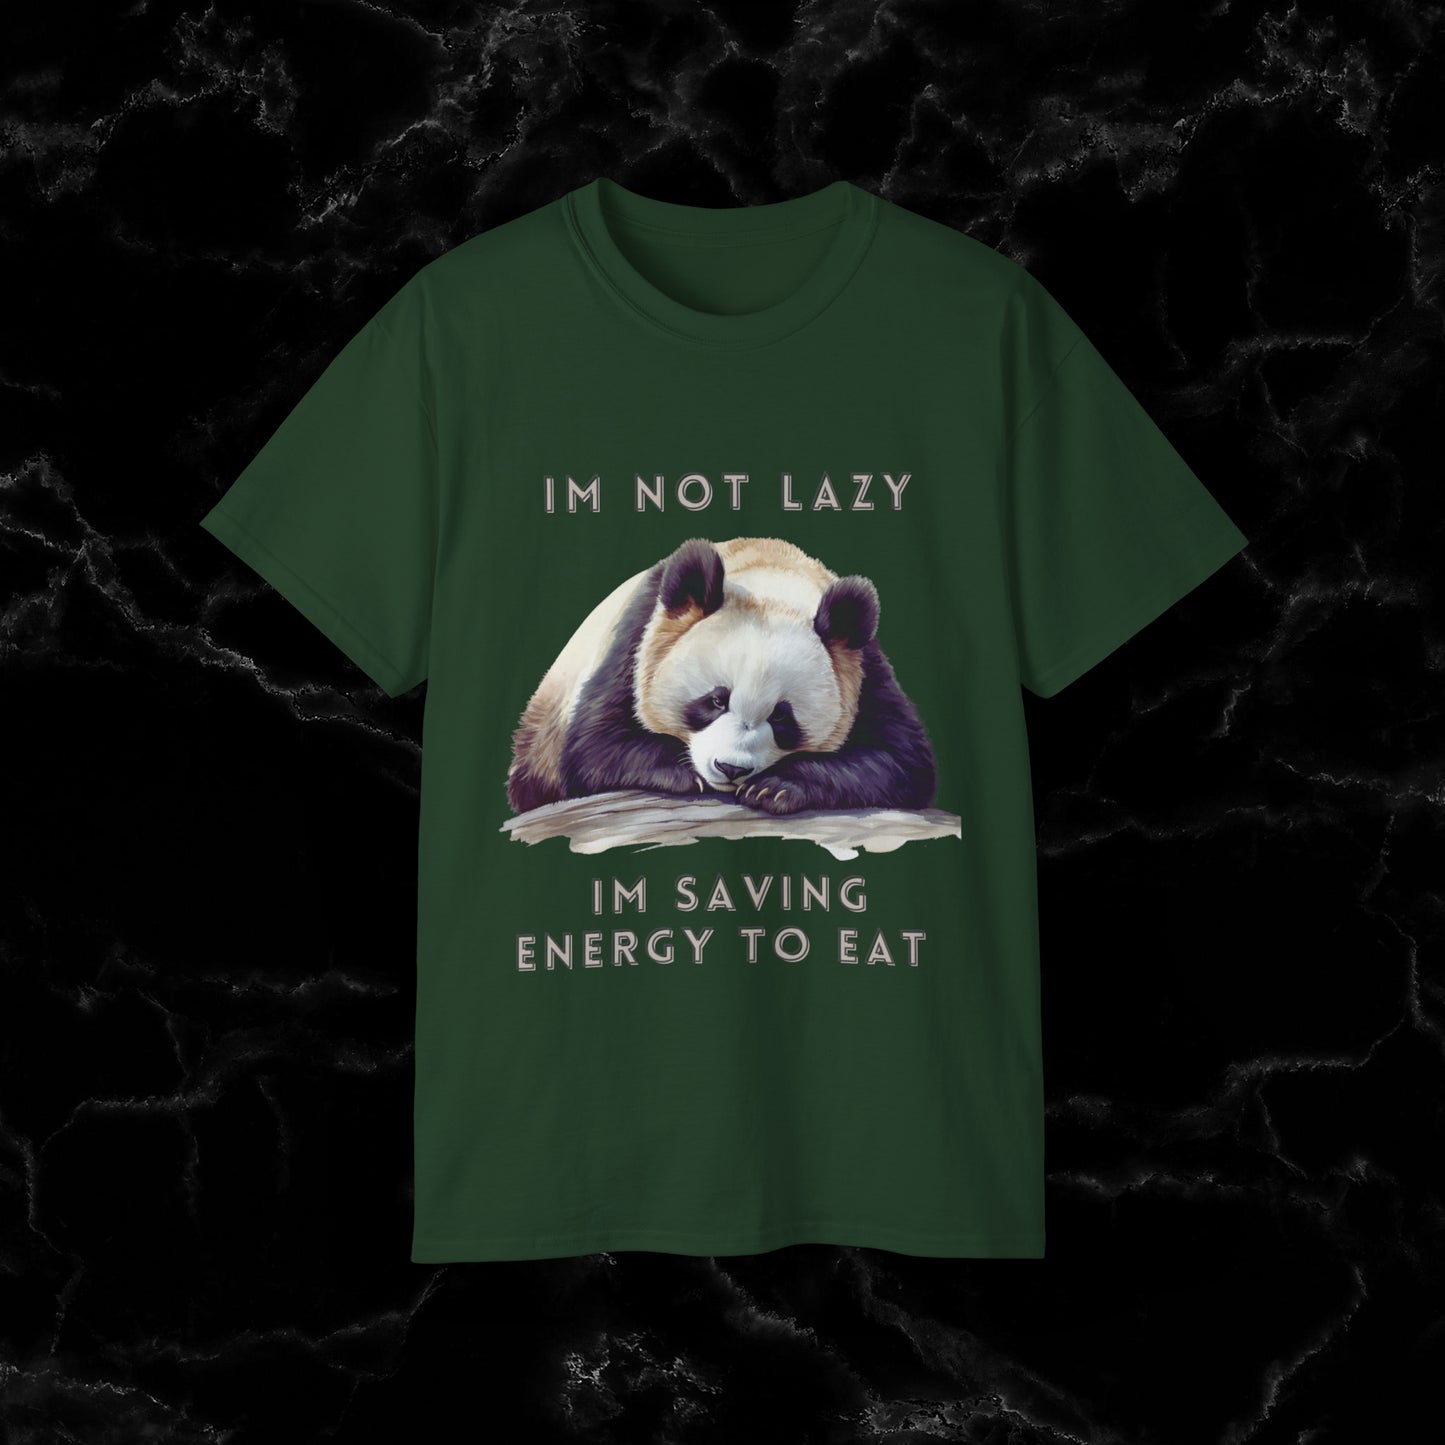 Nap Time Panda Unisex Funny Tee - Hilarious Panda Nap Design - I'm Not Lazy, I'm Saving Energy to Eat T-Shirt Forest Green S 